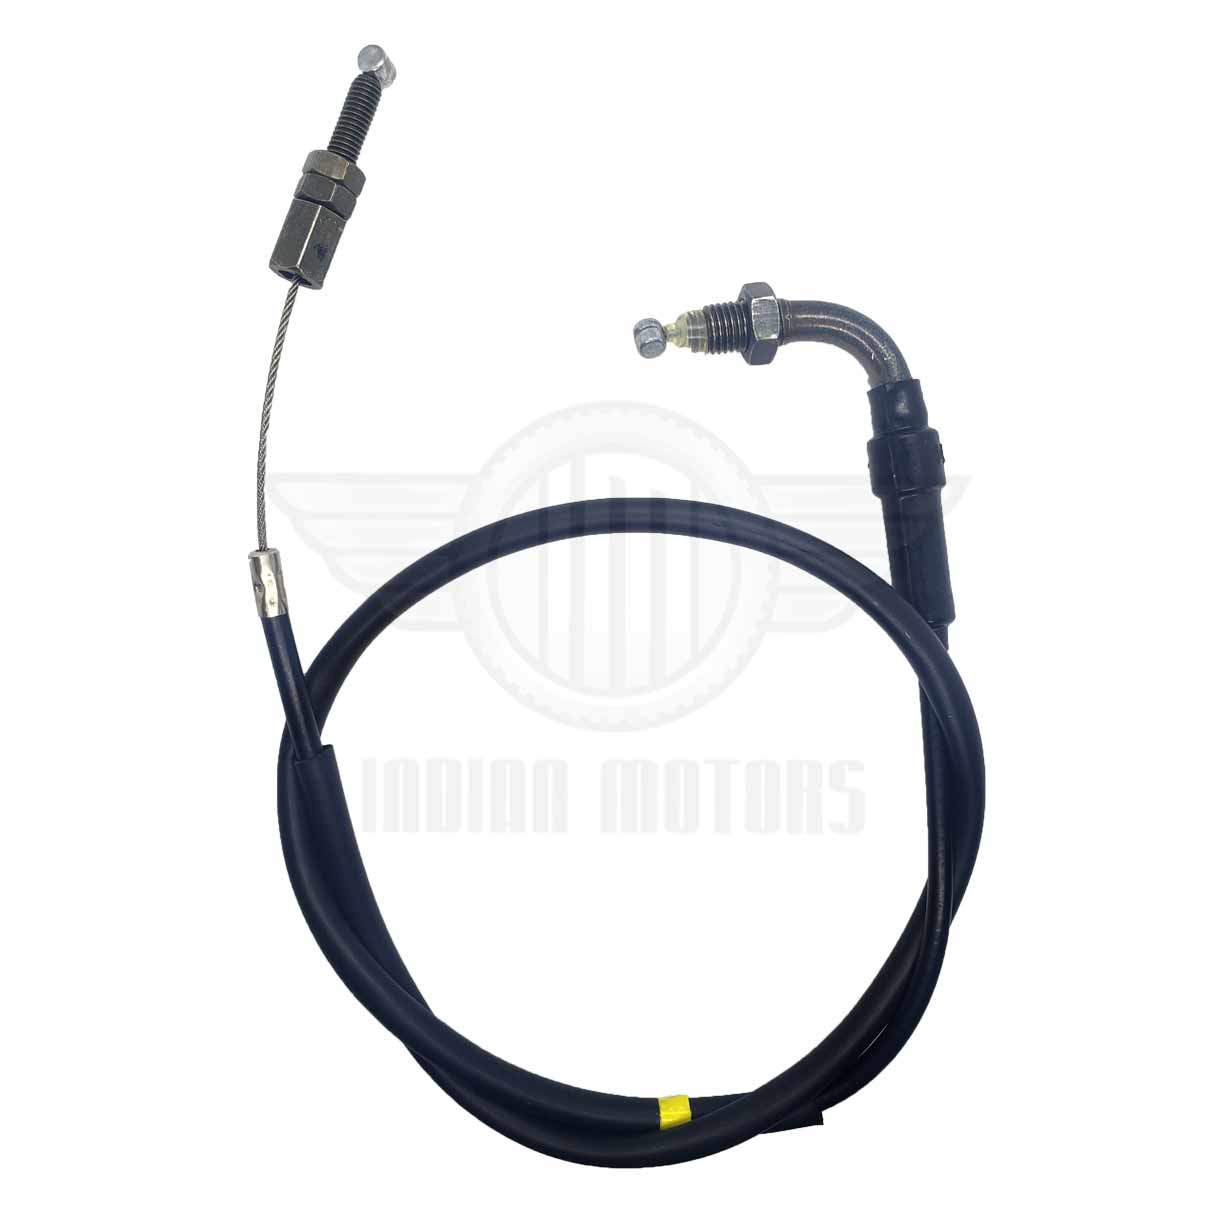 Chicote Cable Acelerador Moto Pulsar 220 Neon Bajaj – Bajaj Matriz